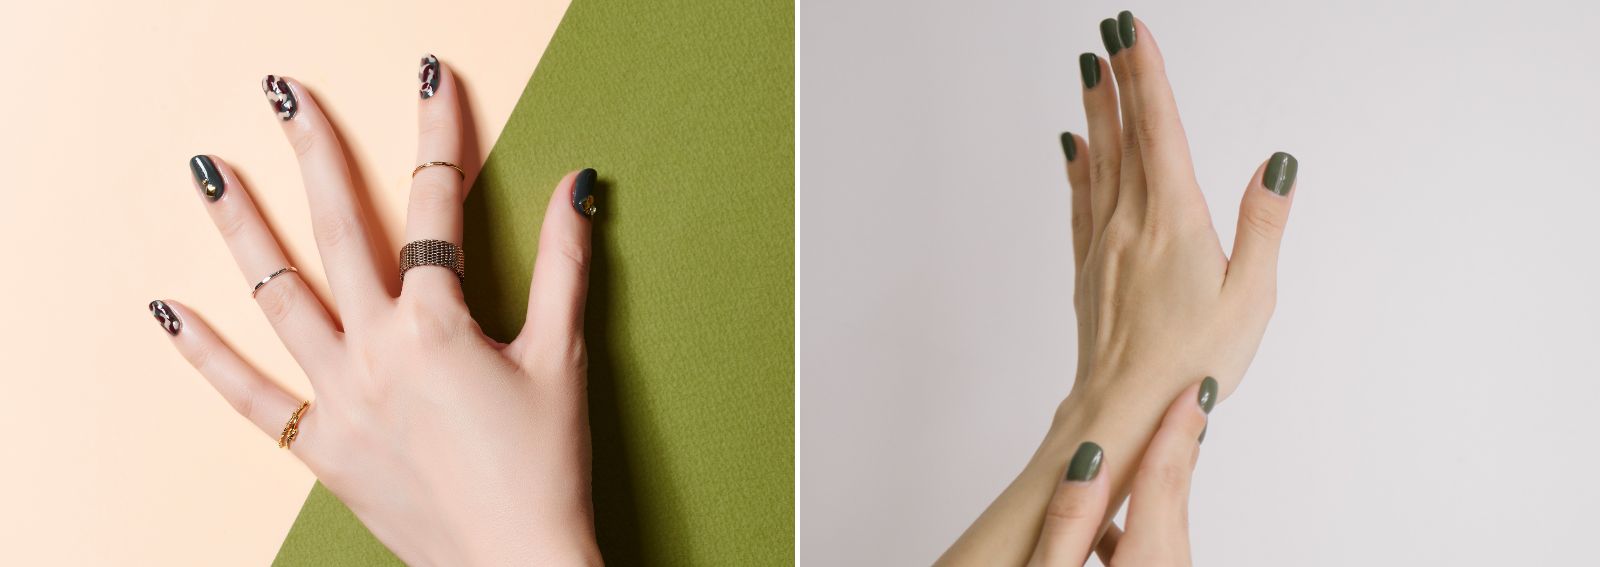 army-green-nail-art-style-manicure